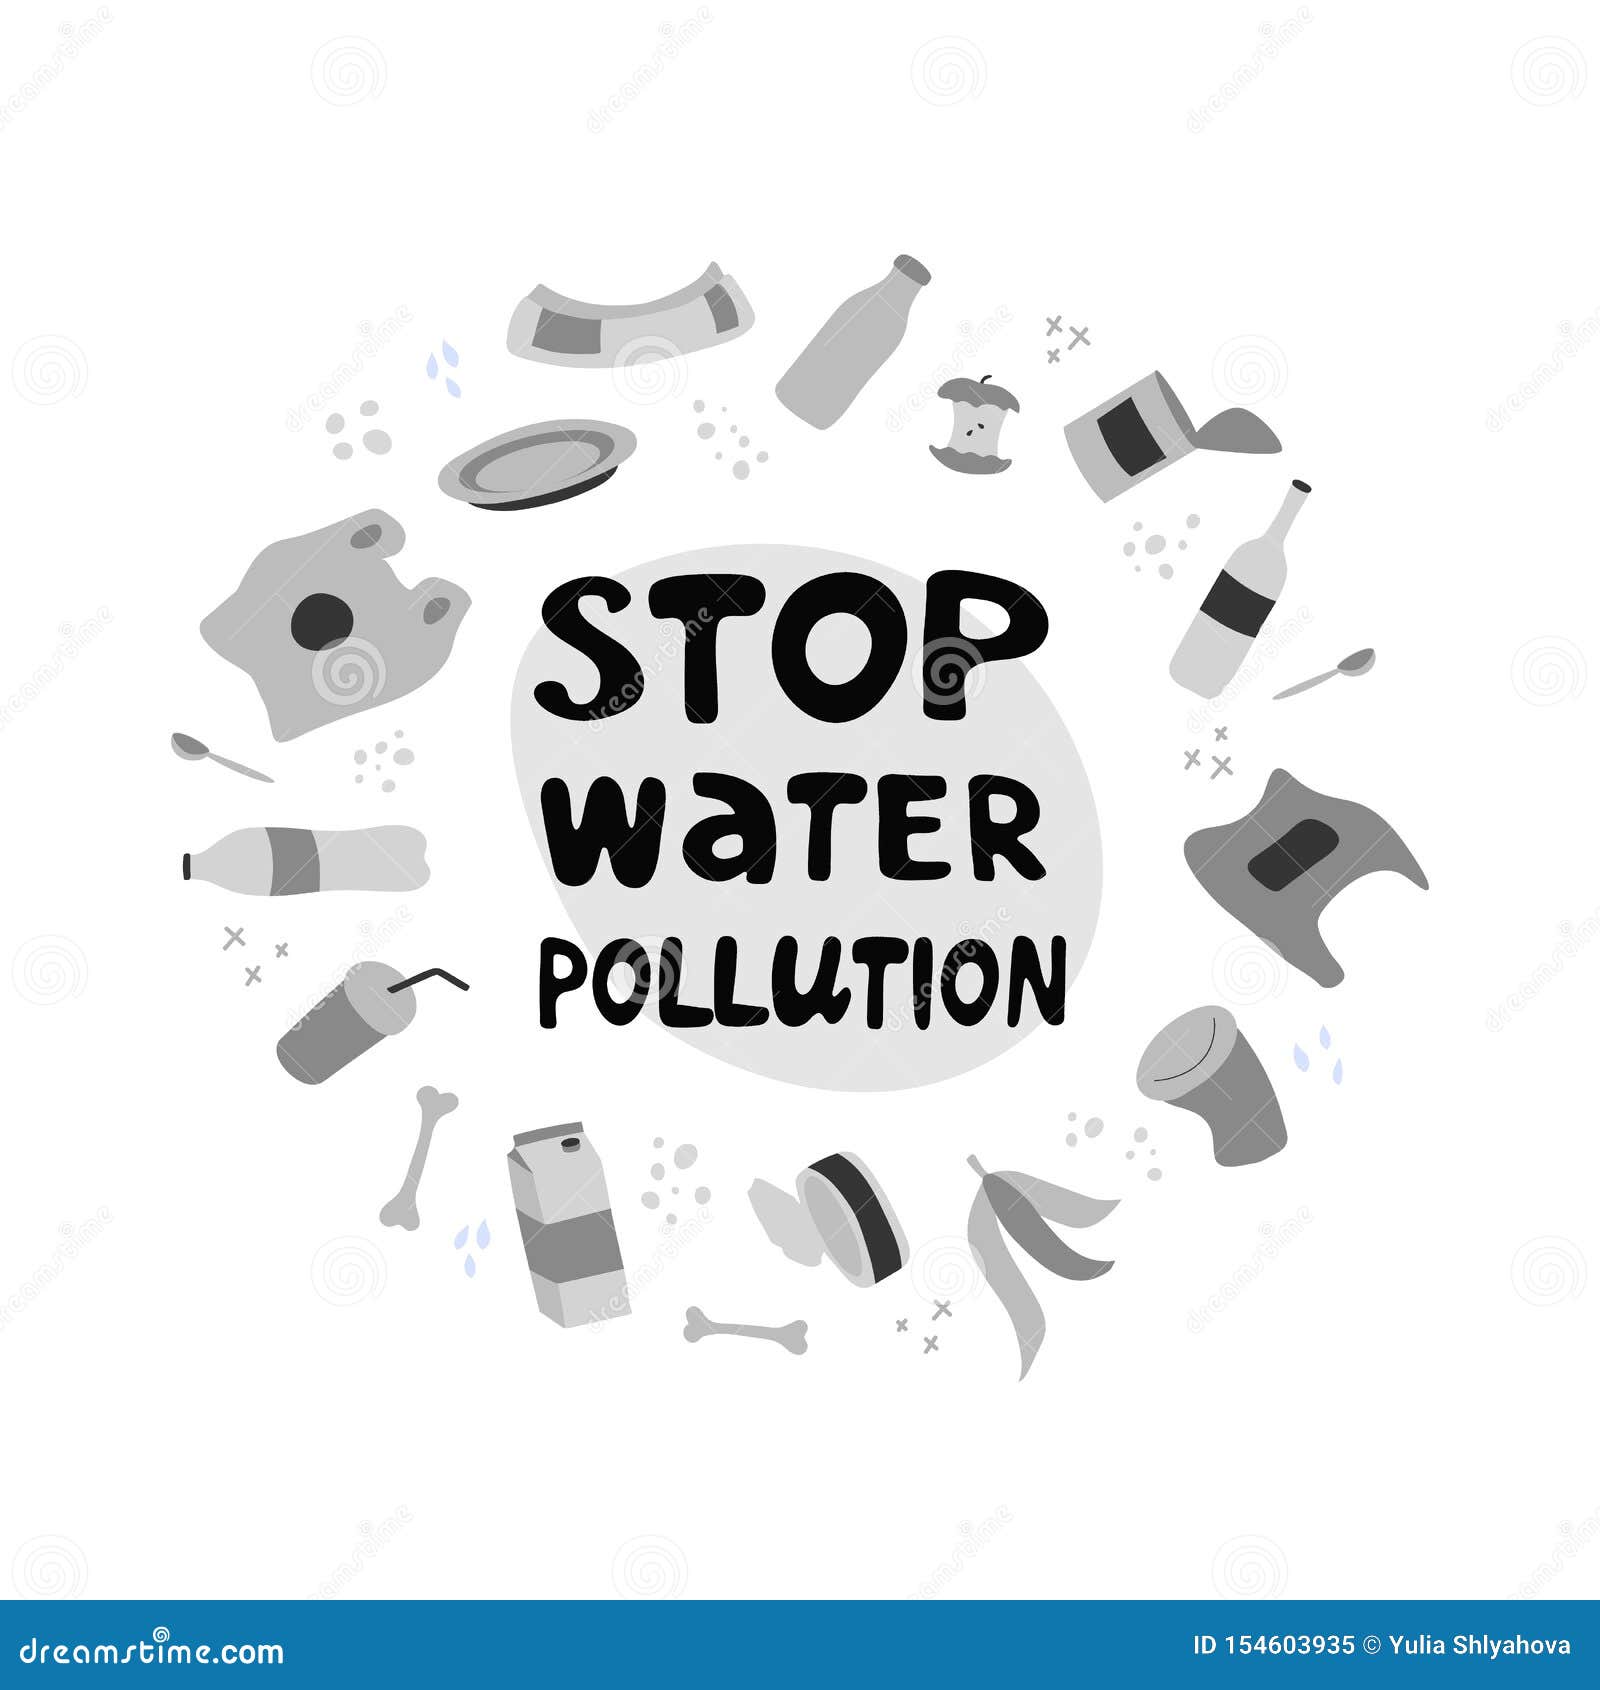 Water Pollution Awareness N0pollutionN0  X